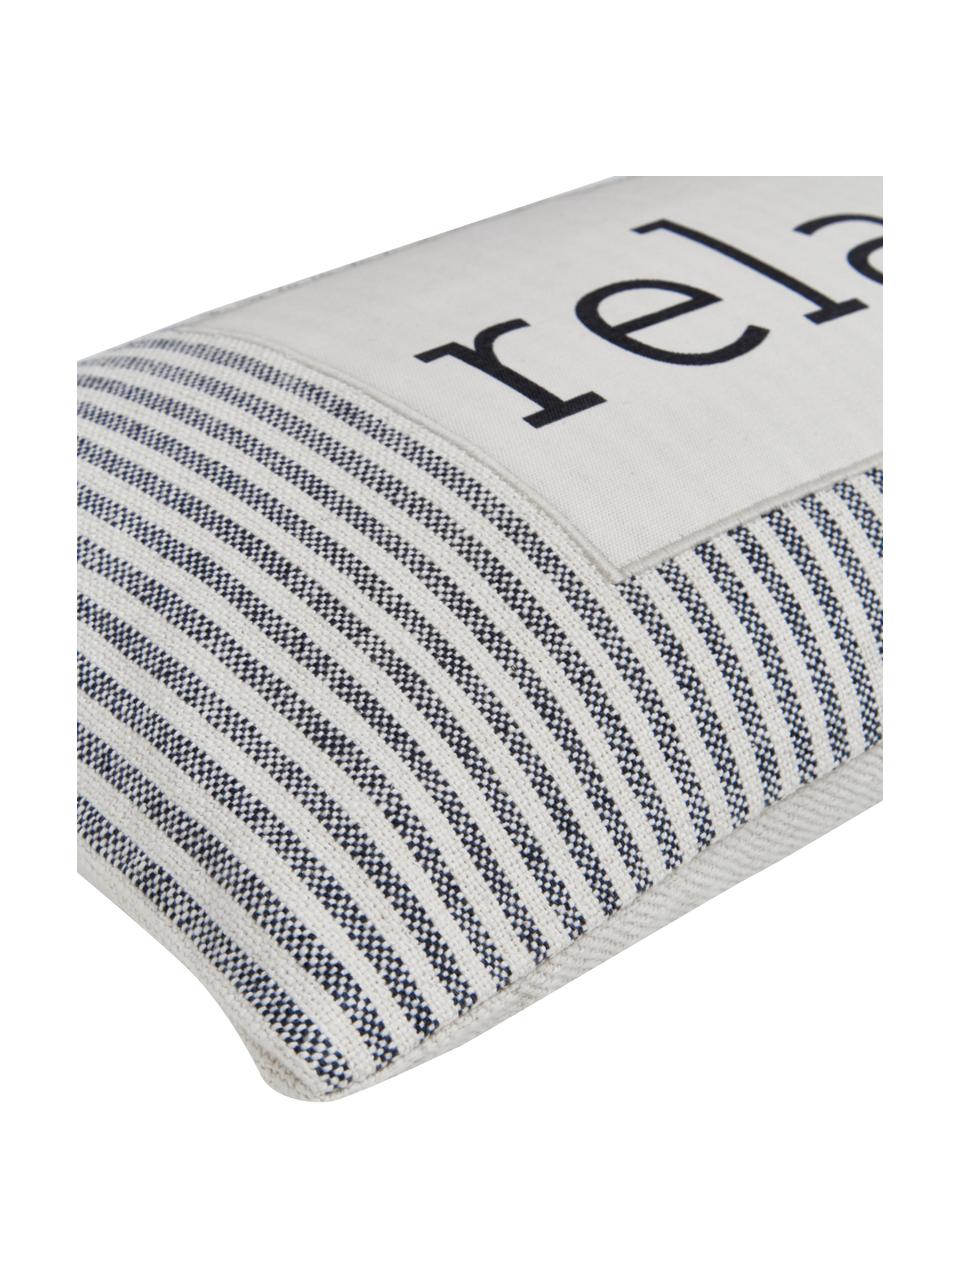 Gestreifte Kissenhülle Relax aus recycelter Baumwolle, 100% Baumwolle, GRS-zertifiziert, Schwarz,Weiß, B 30 x L 60 cm